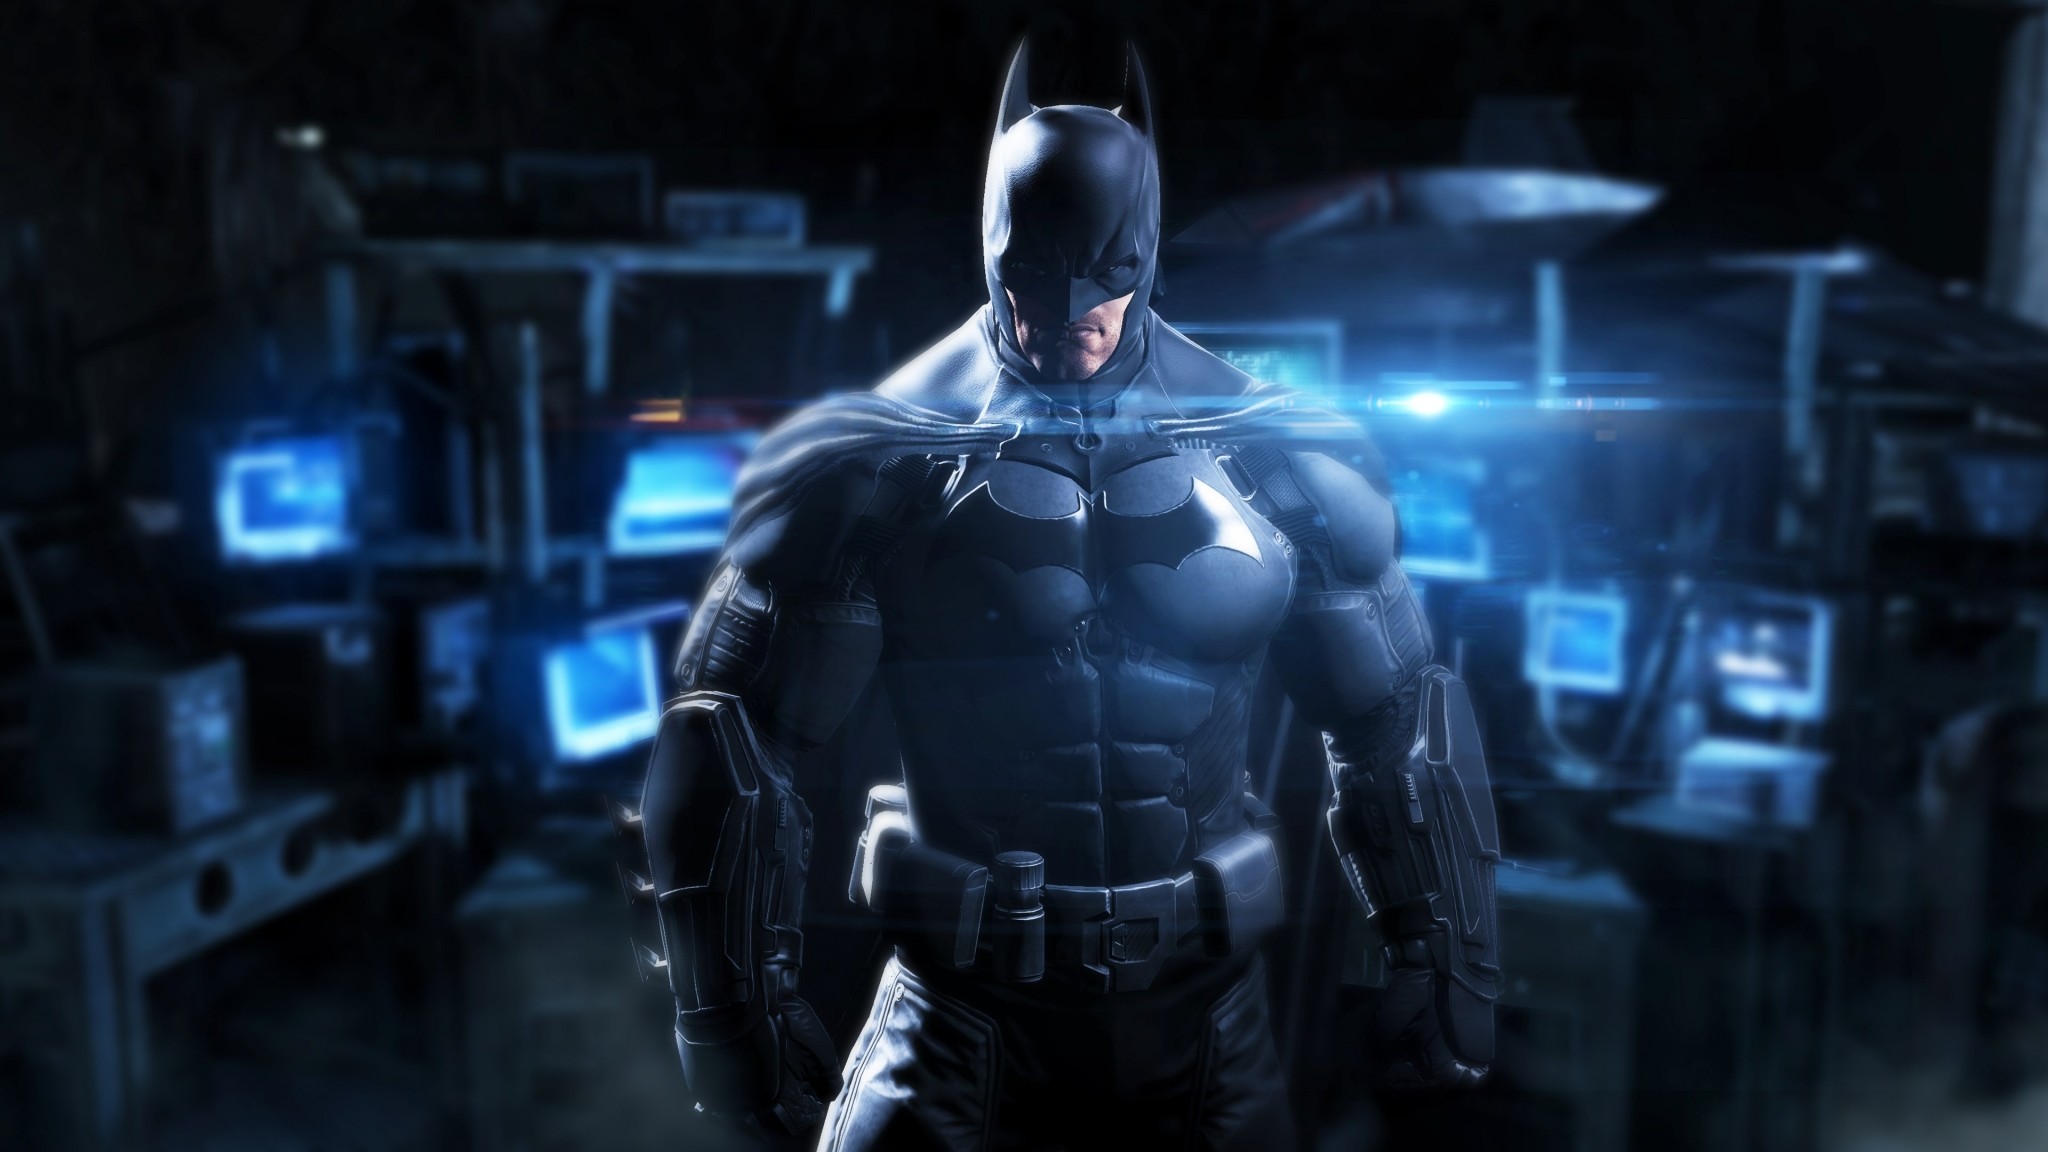 Batman screensavers and backgrounds free